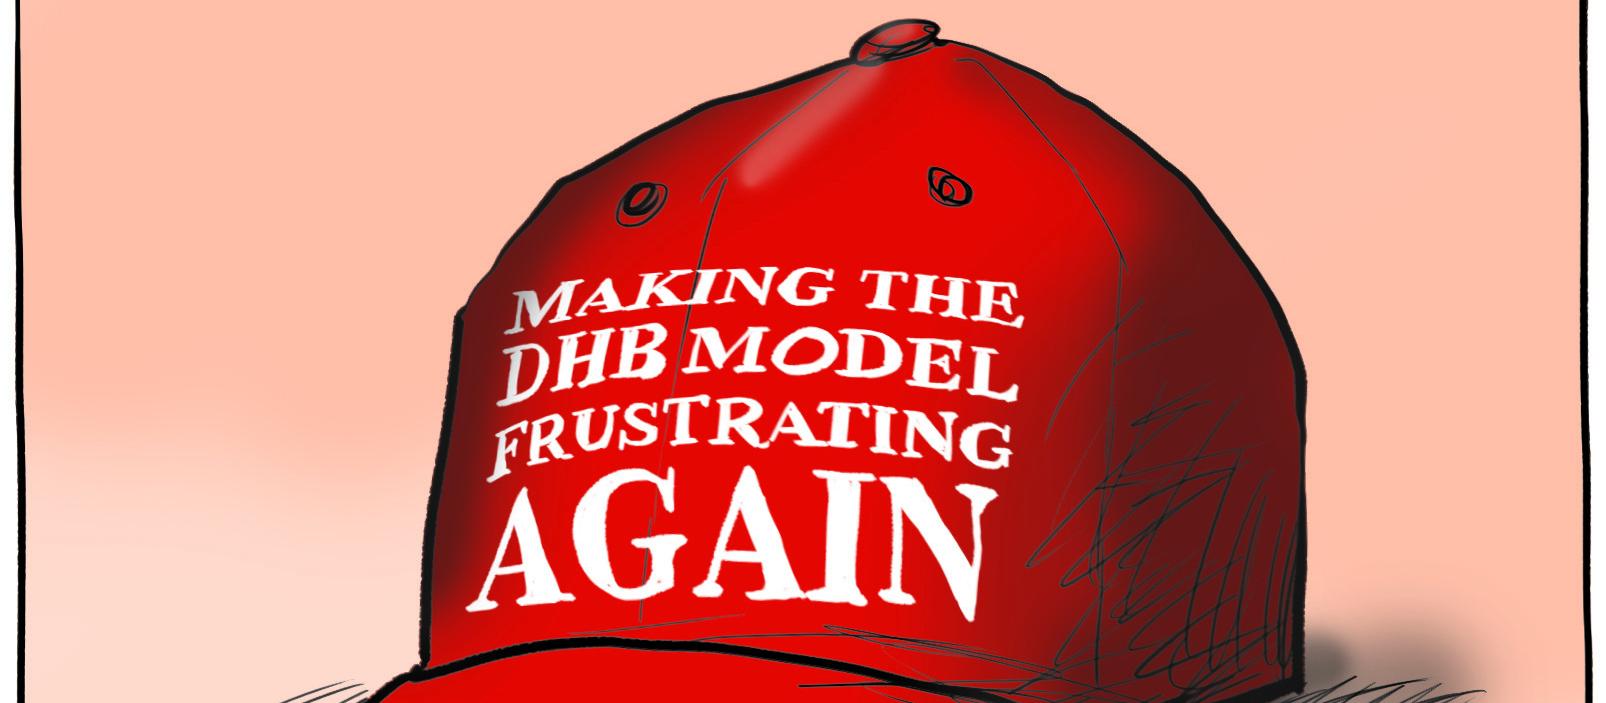 MAGA hat cartoon - "Making the DHB model frustrating again"